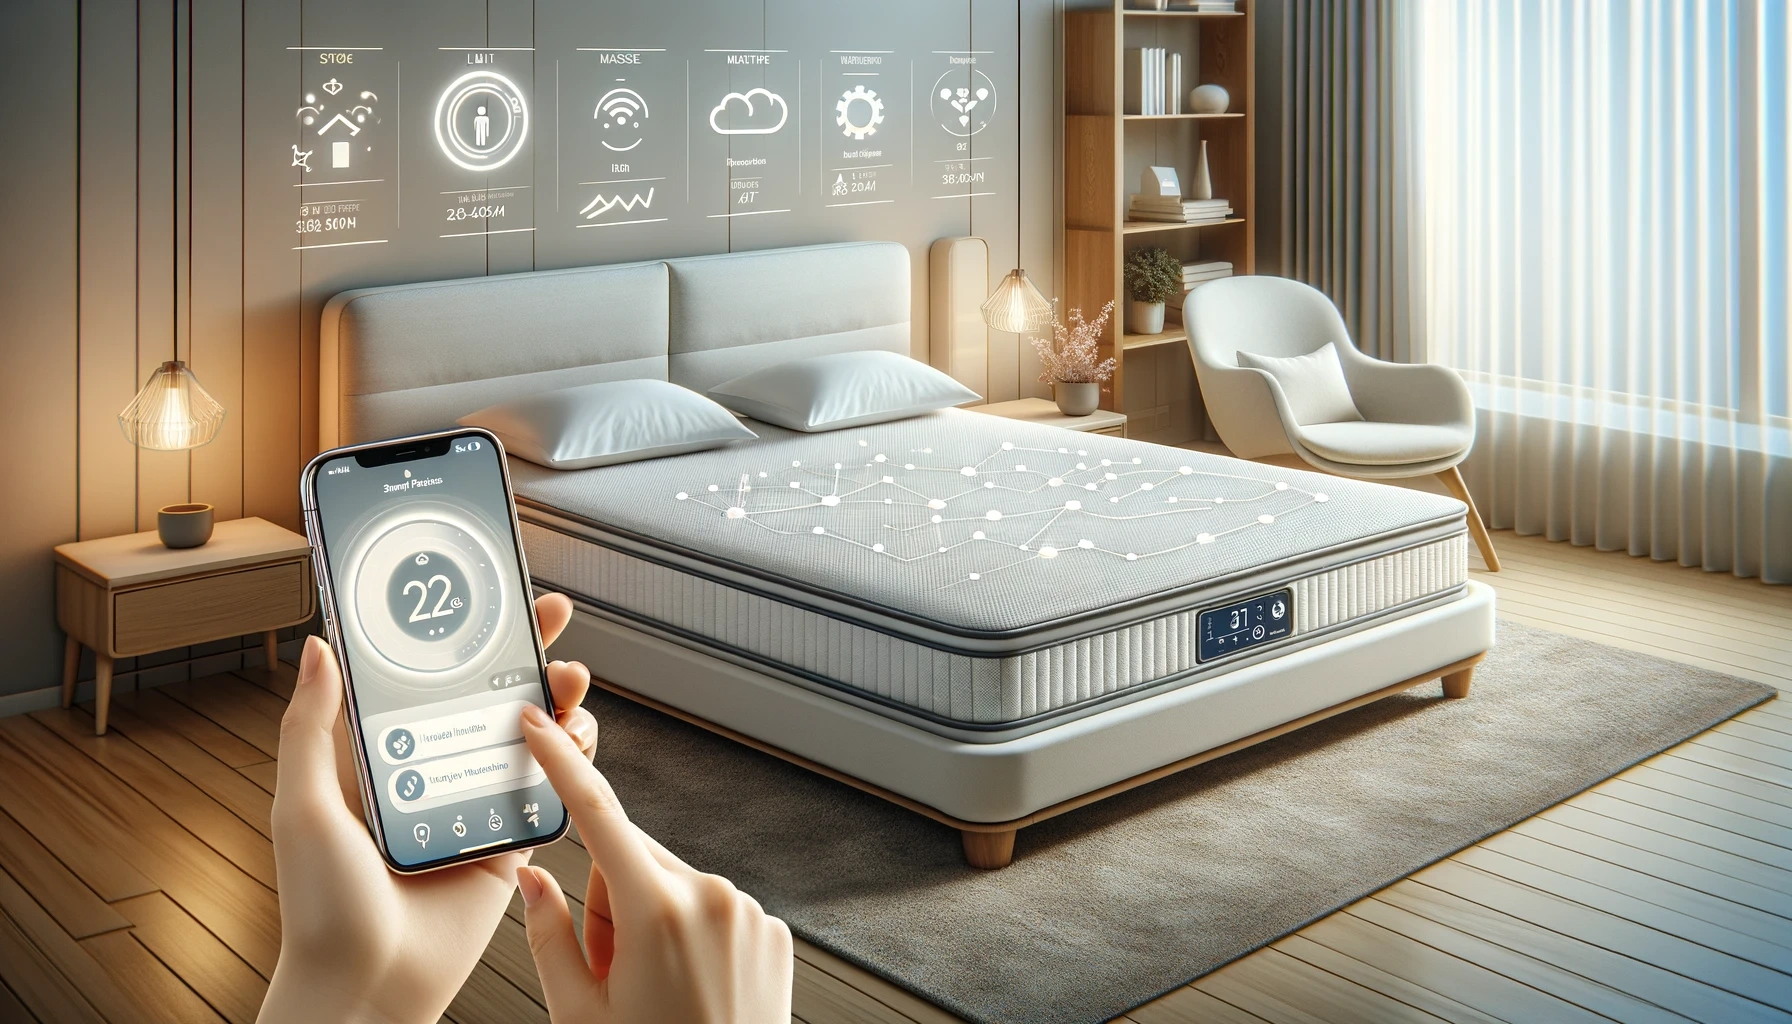 mobile app controls the smart mattress